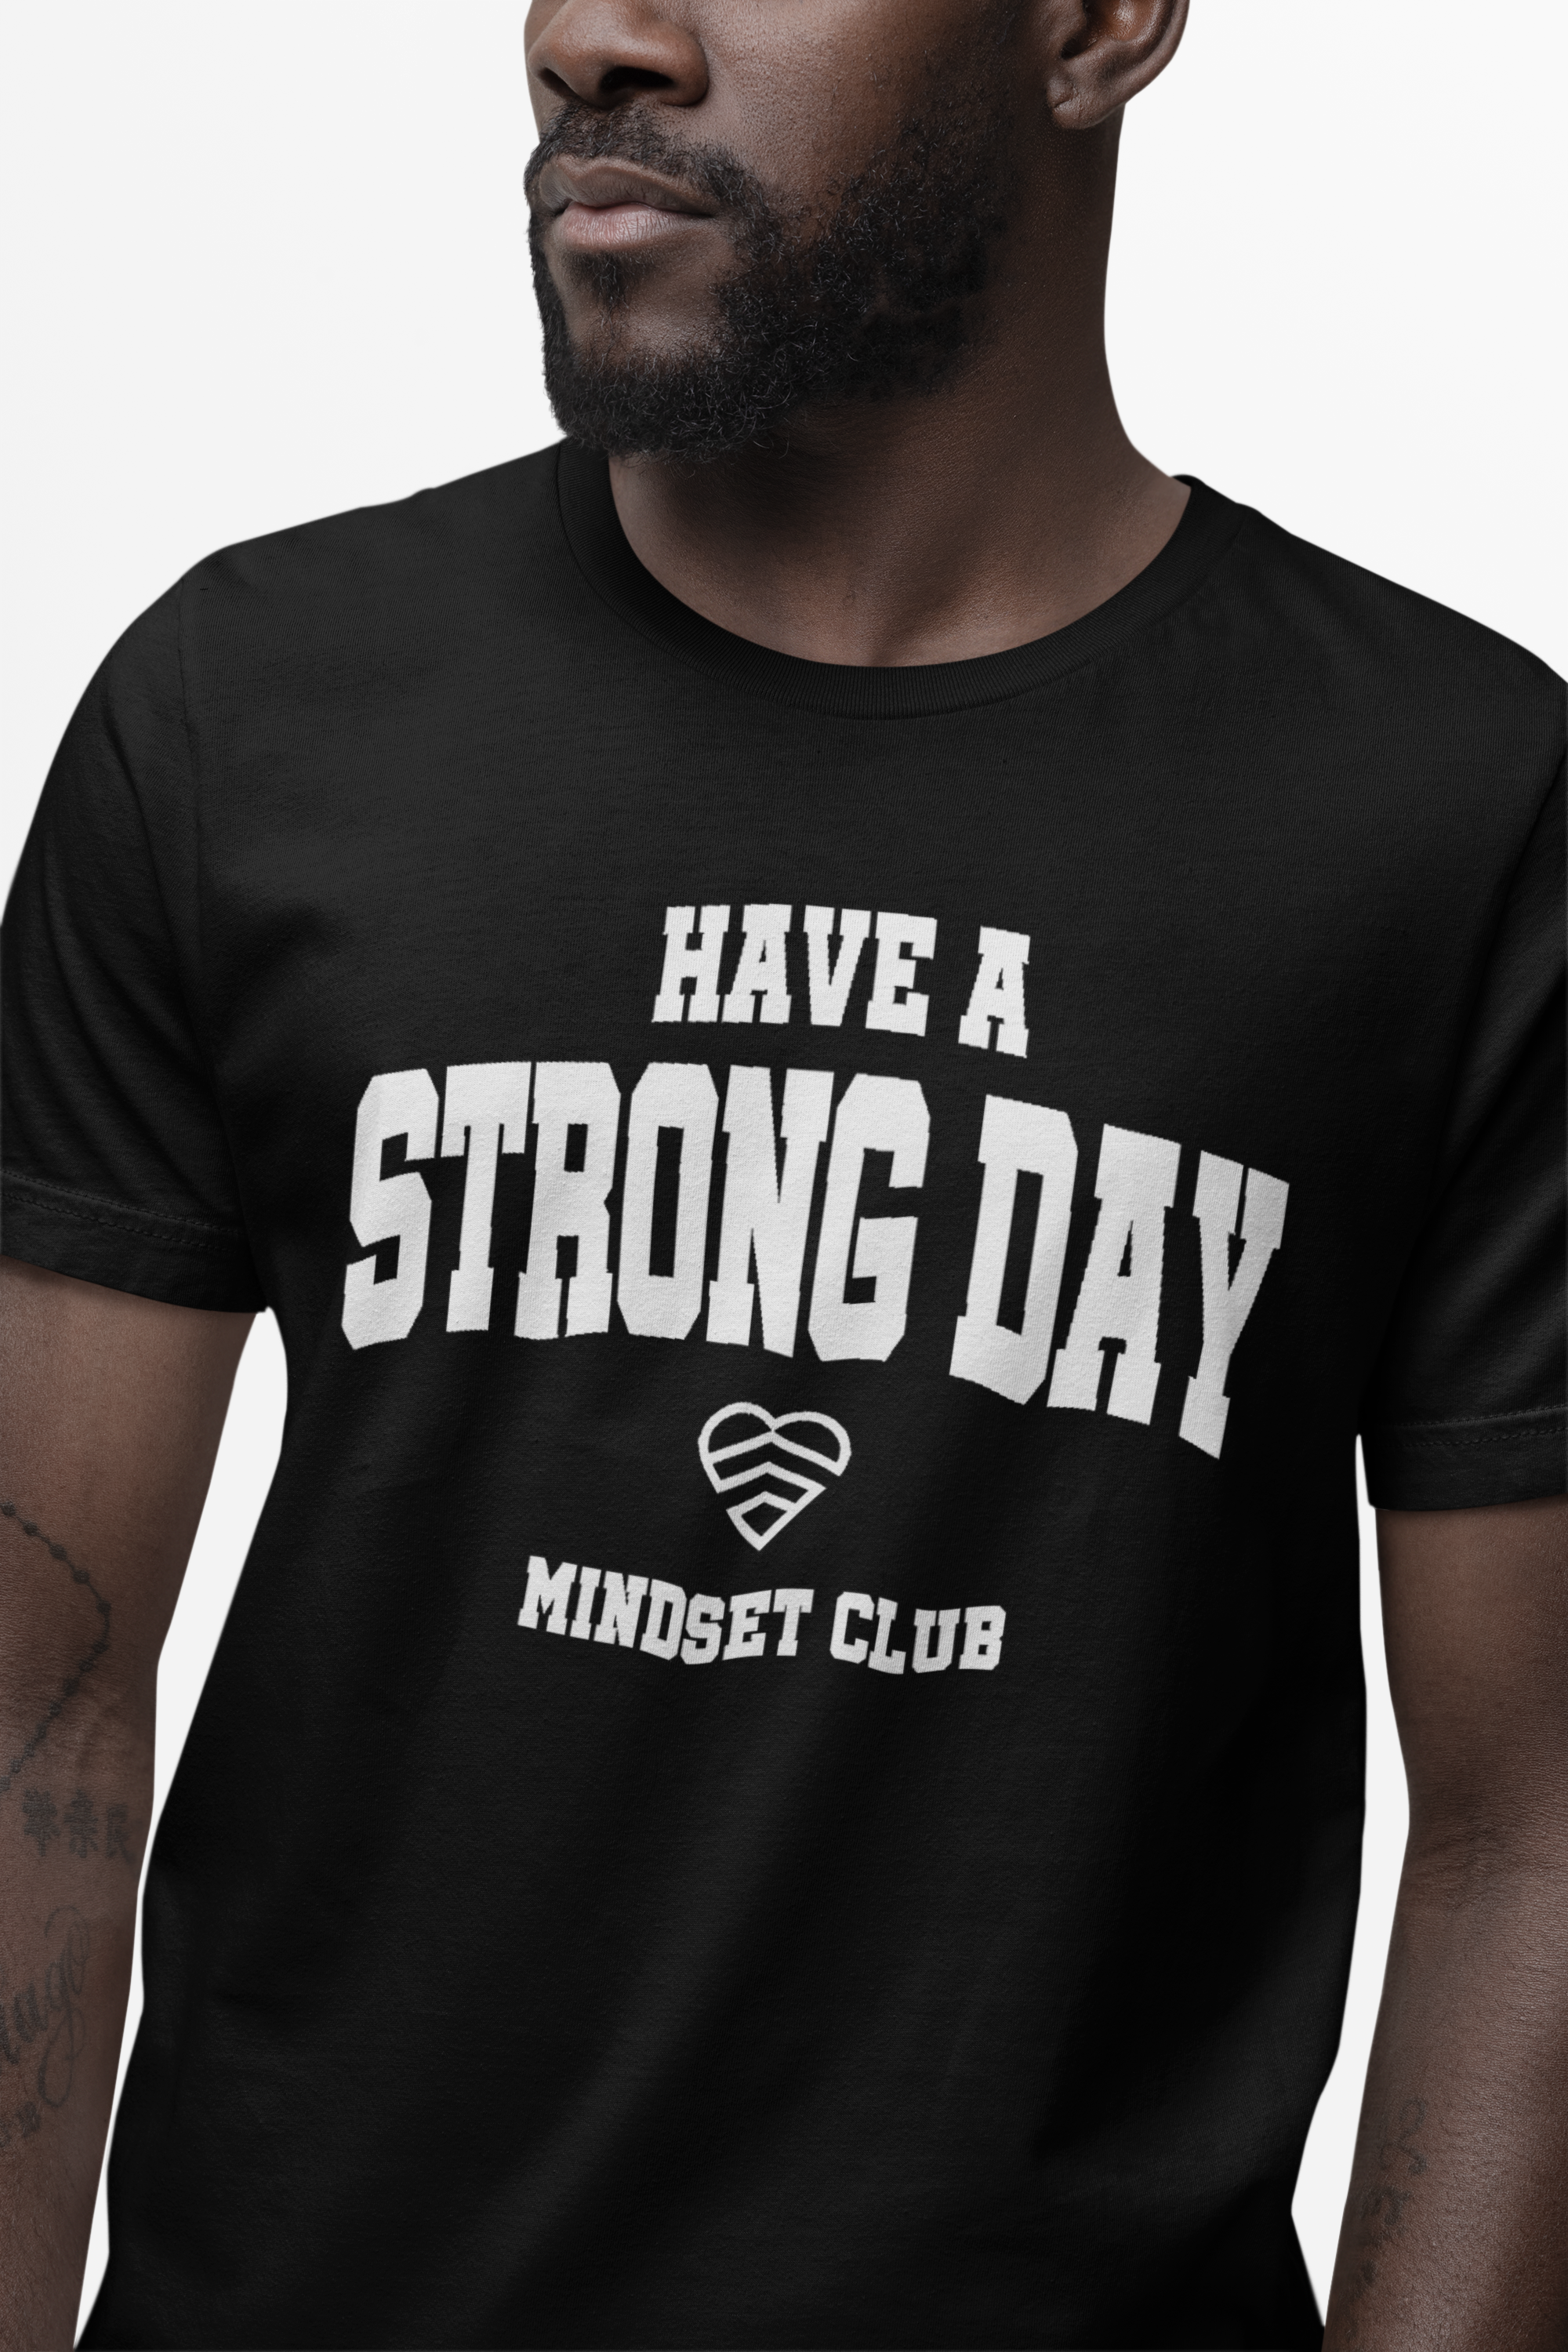 Mindset Club Statement Shirt - Black